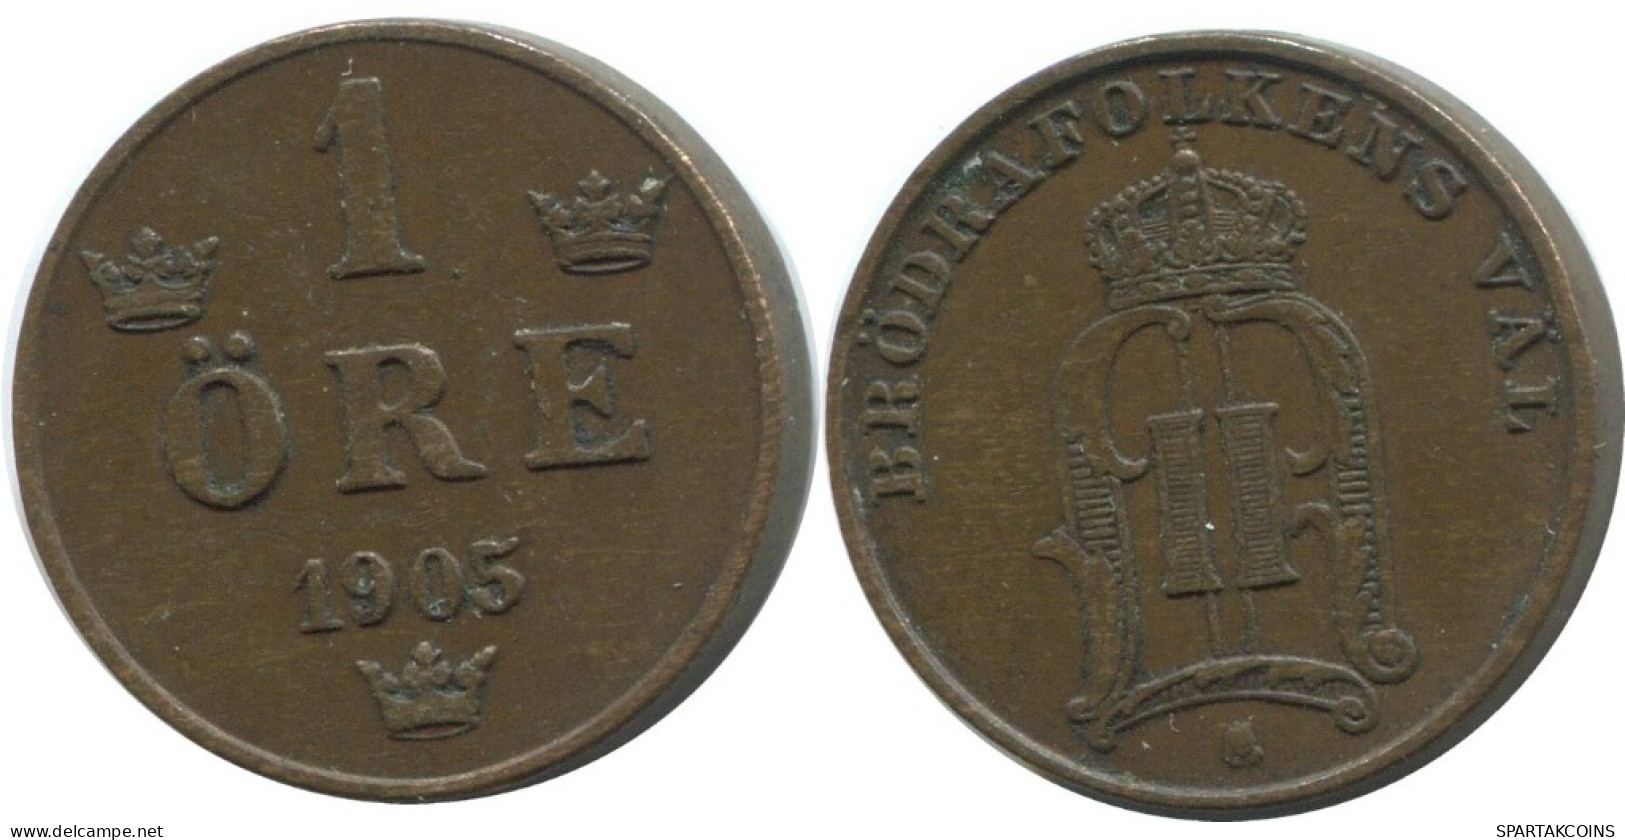 1 ORE 1905 SWEDEN Coin #AD316.2.U.A - Sweden